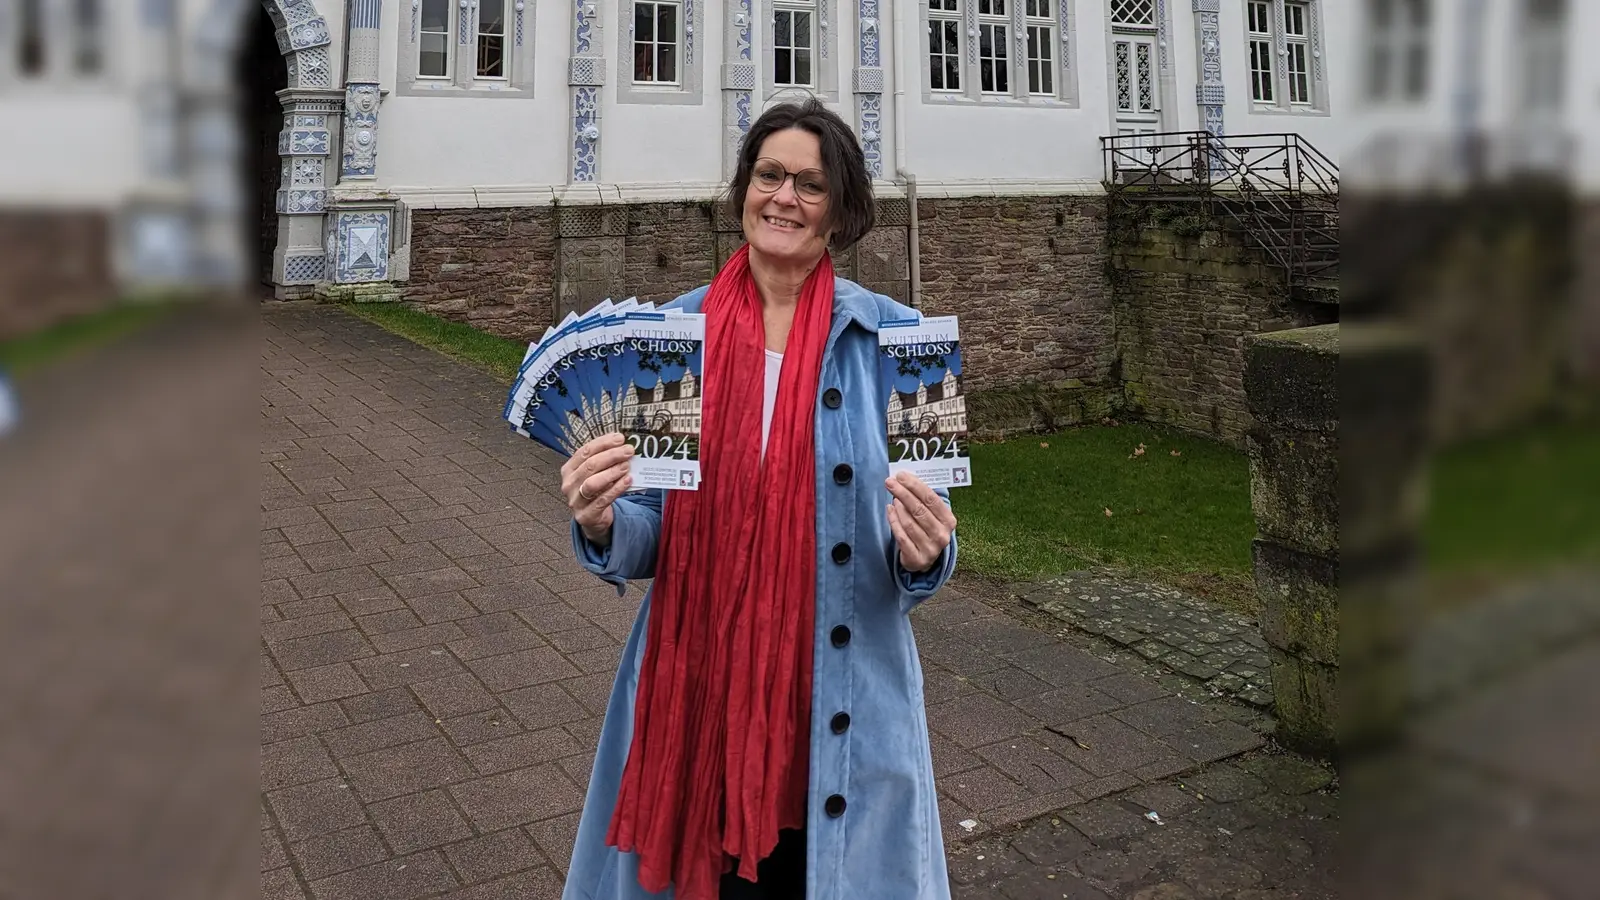 Elisabeth Brügger, Programmleitung Kulturzentrum Schloss Bevern, mit dem druckfrischen Programmheft zur Kultur im Schloss. (Foto: privat)